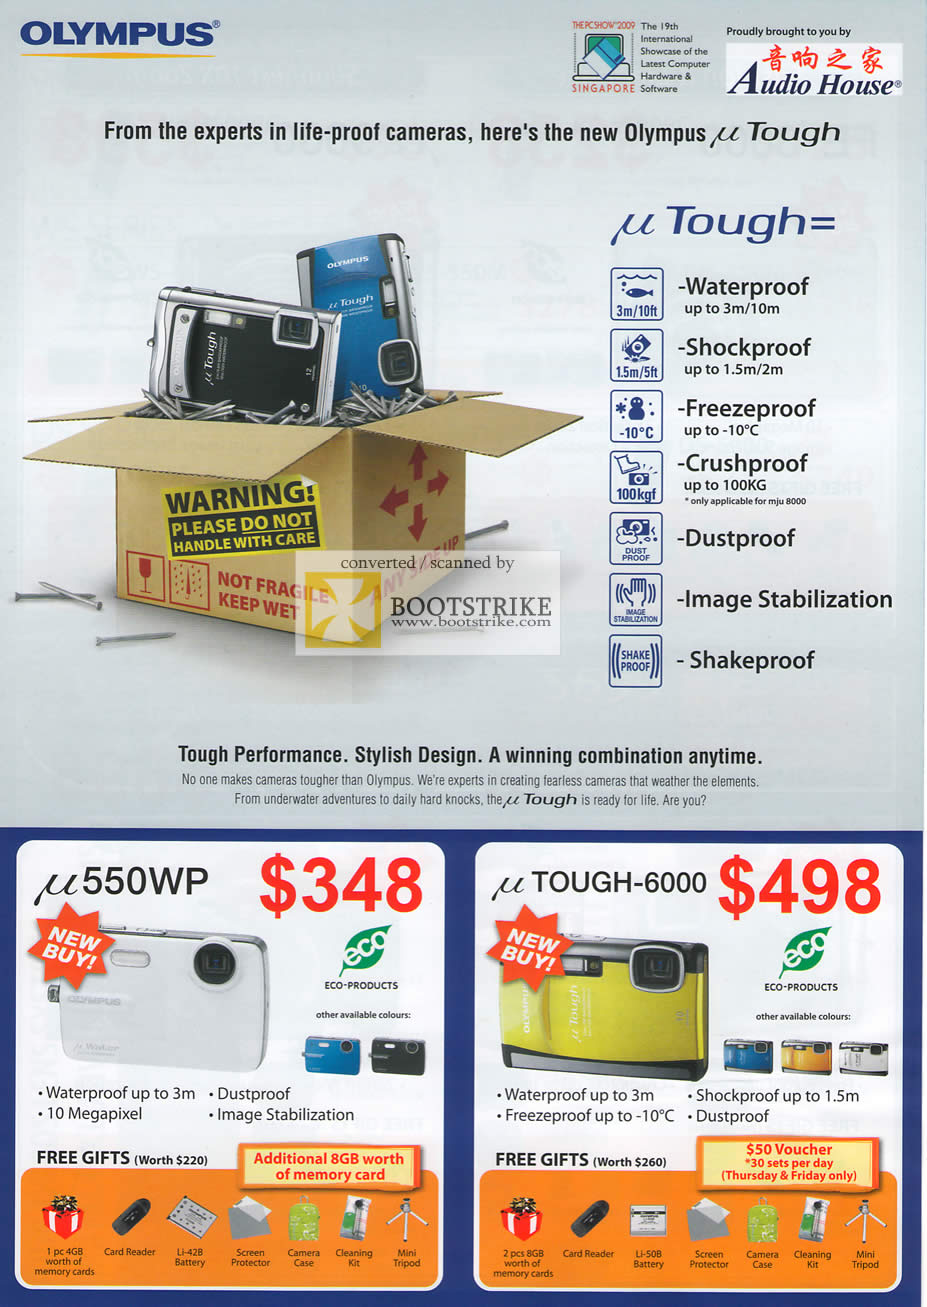 PC Show 2009 price list image brochure of Olympus Digital Cameras U550WP UTough-6000